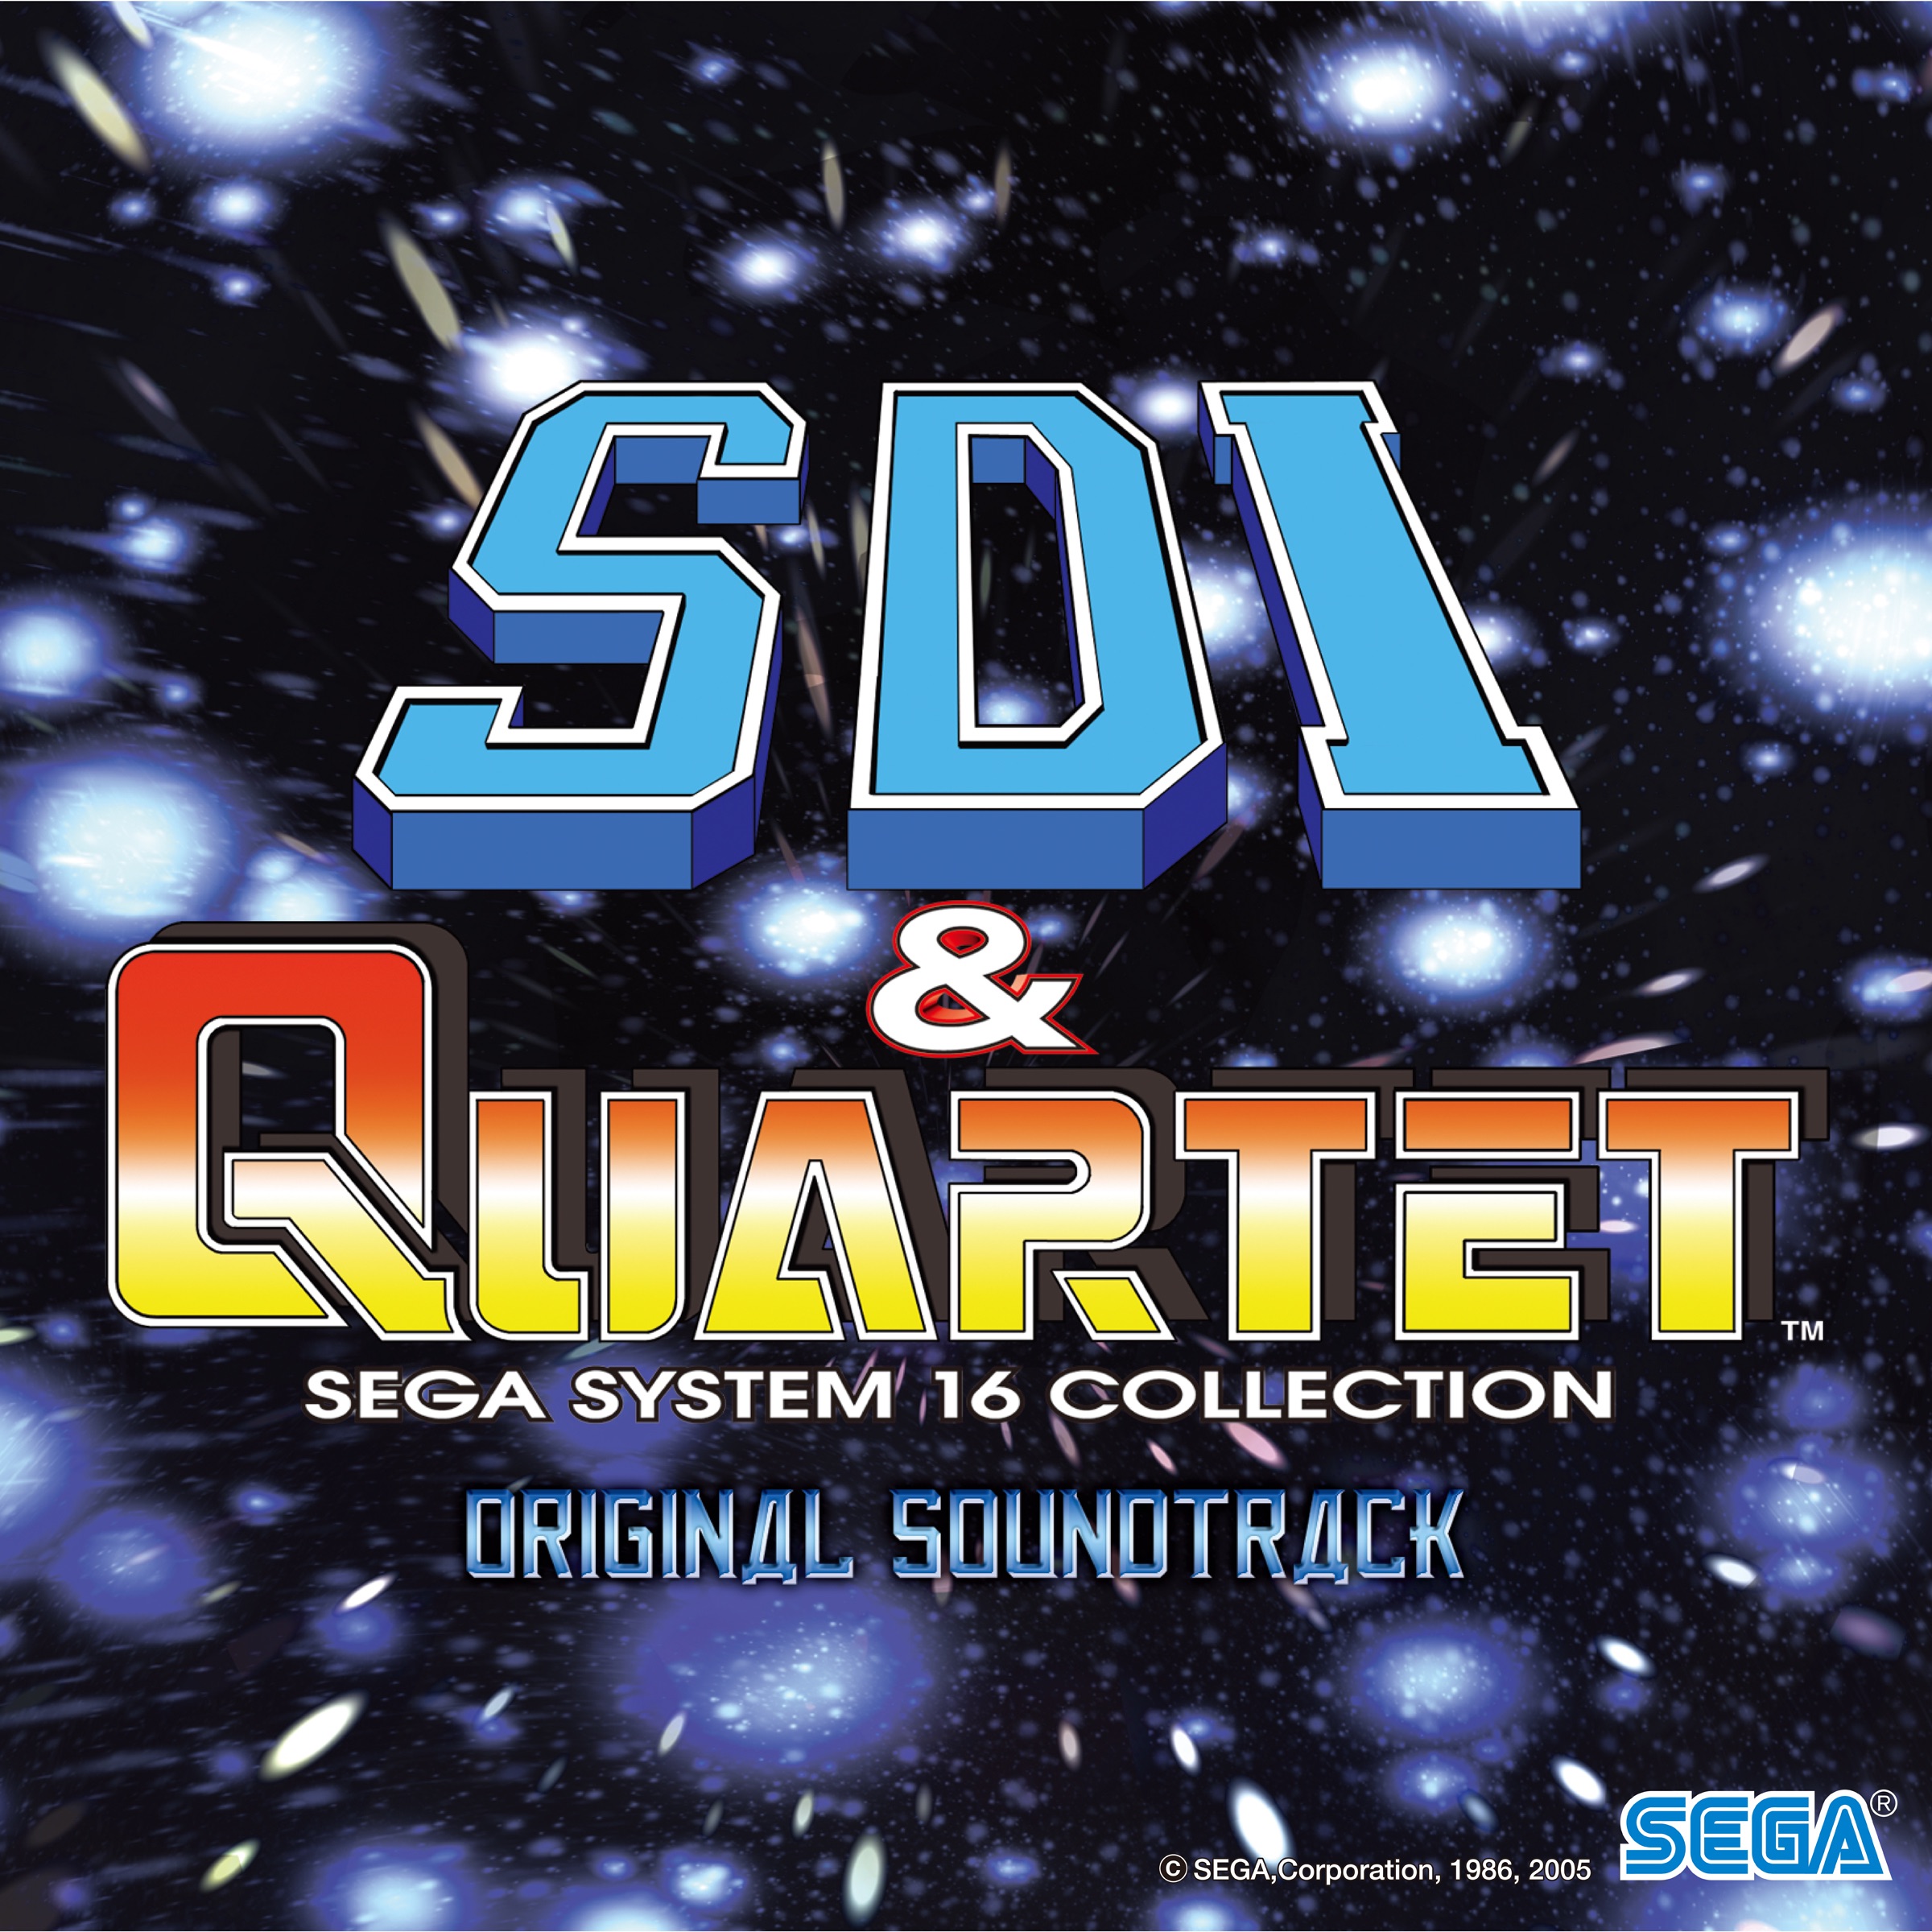 Sega System 16. Quartet Sega. Sega System 16 Art. Группа Sega песни. Саундтрек сега